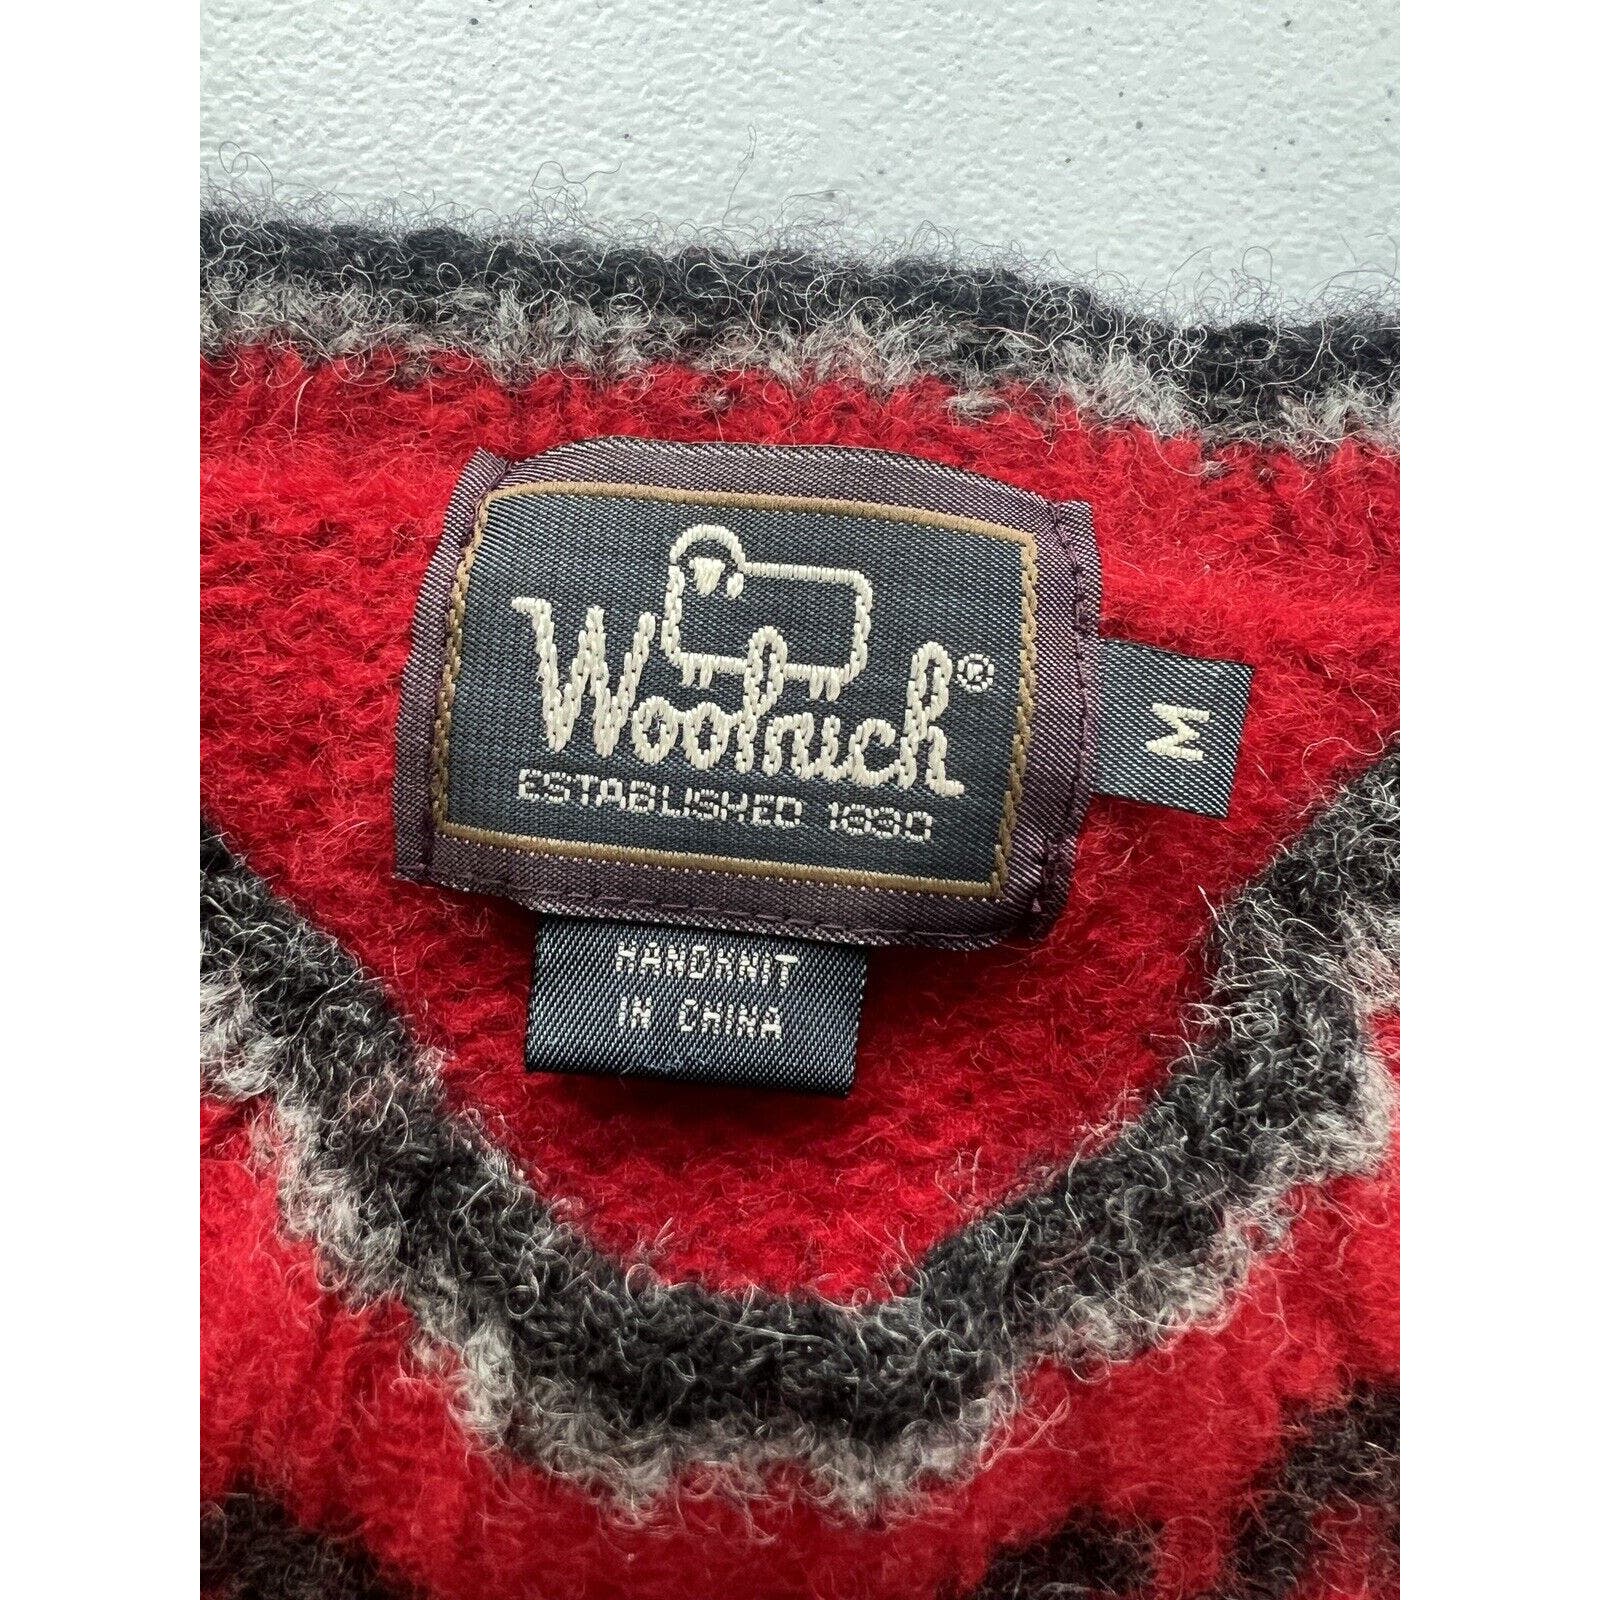 Woolrich Hand Knit Sweater Women’s Medium 100% Wool Nordic Fair Isle Vintage